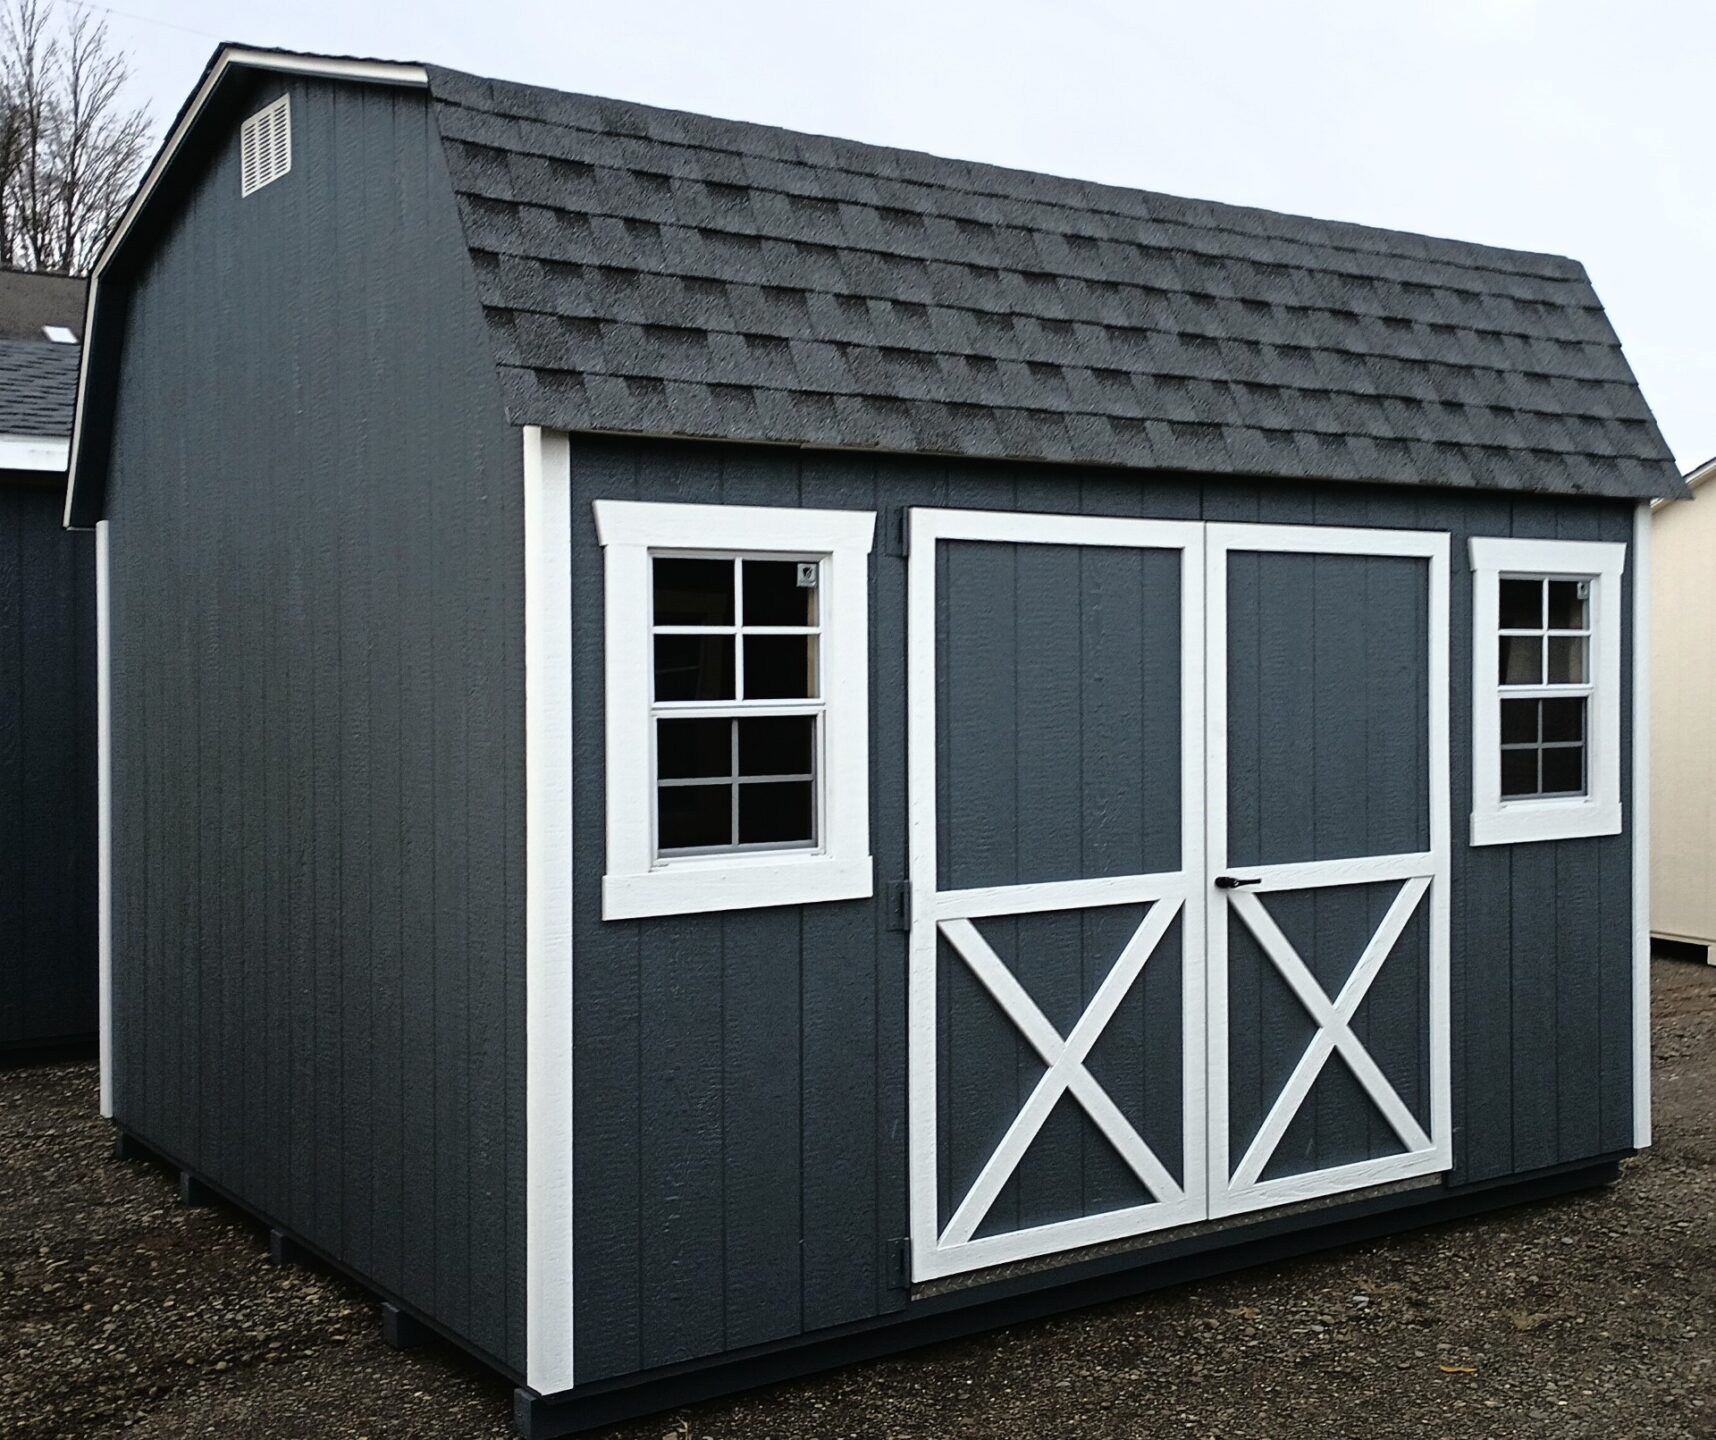 Dark gray barn with white trim, double doors and windows